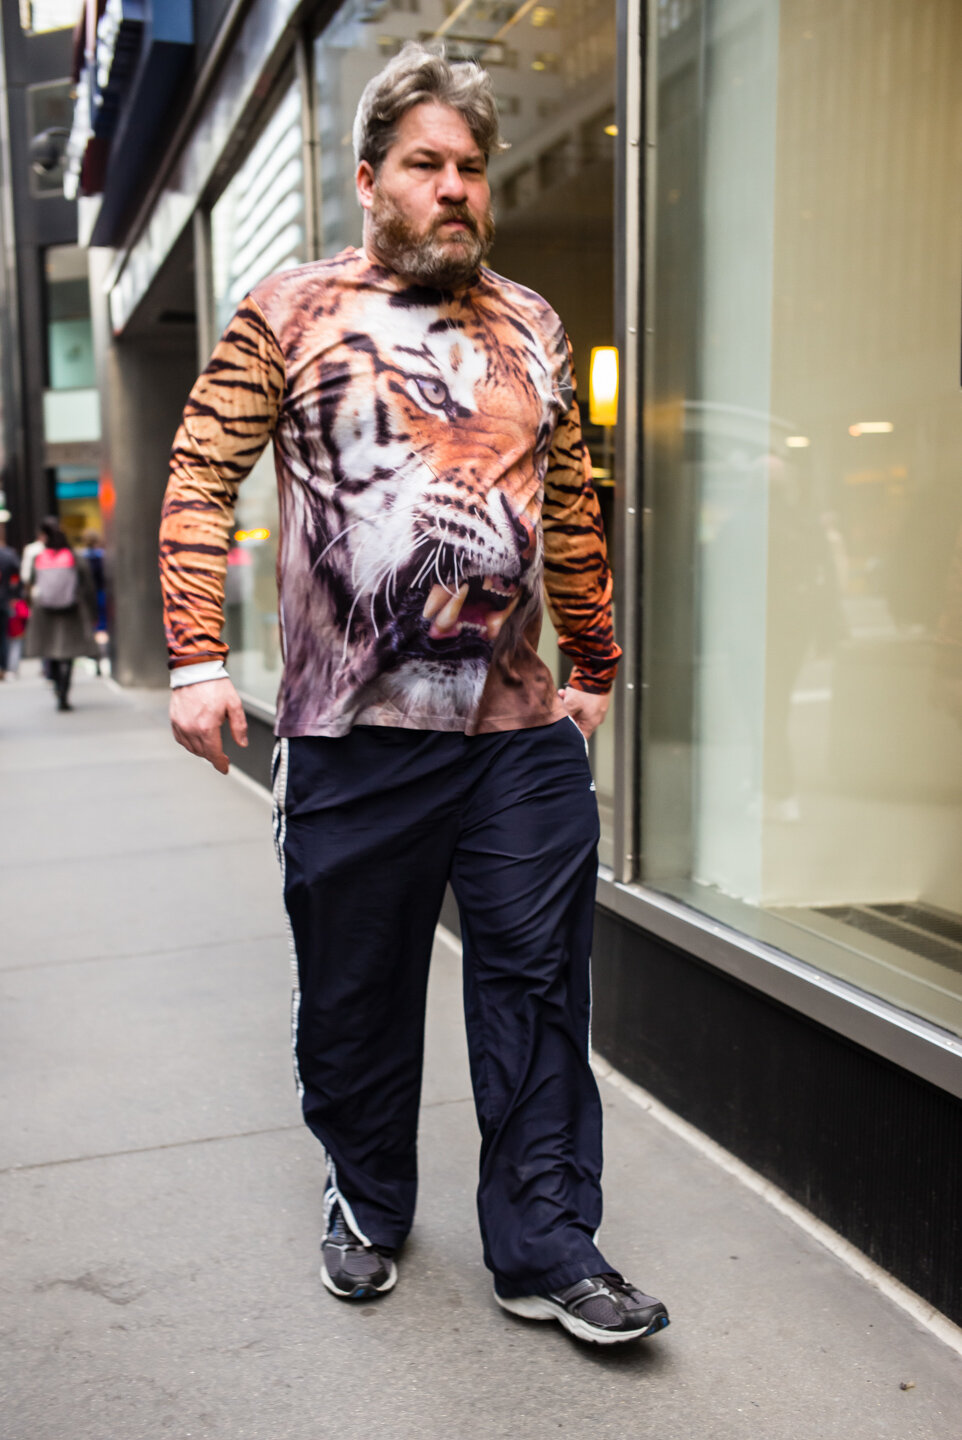 Man with Tiger. New York, New York 2015